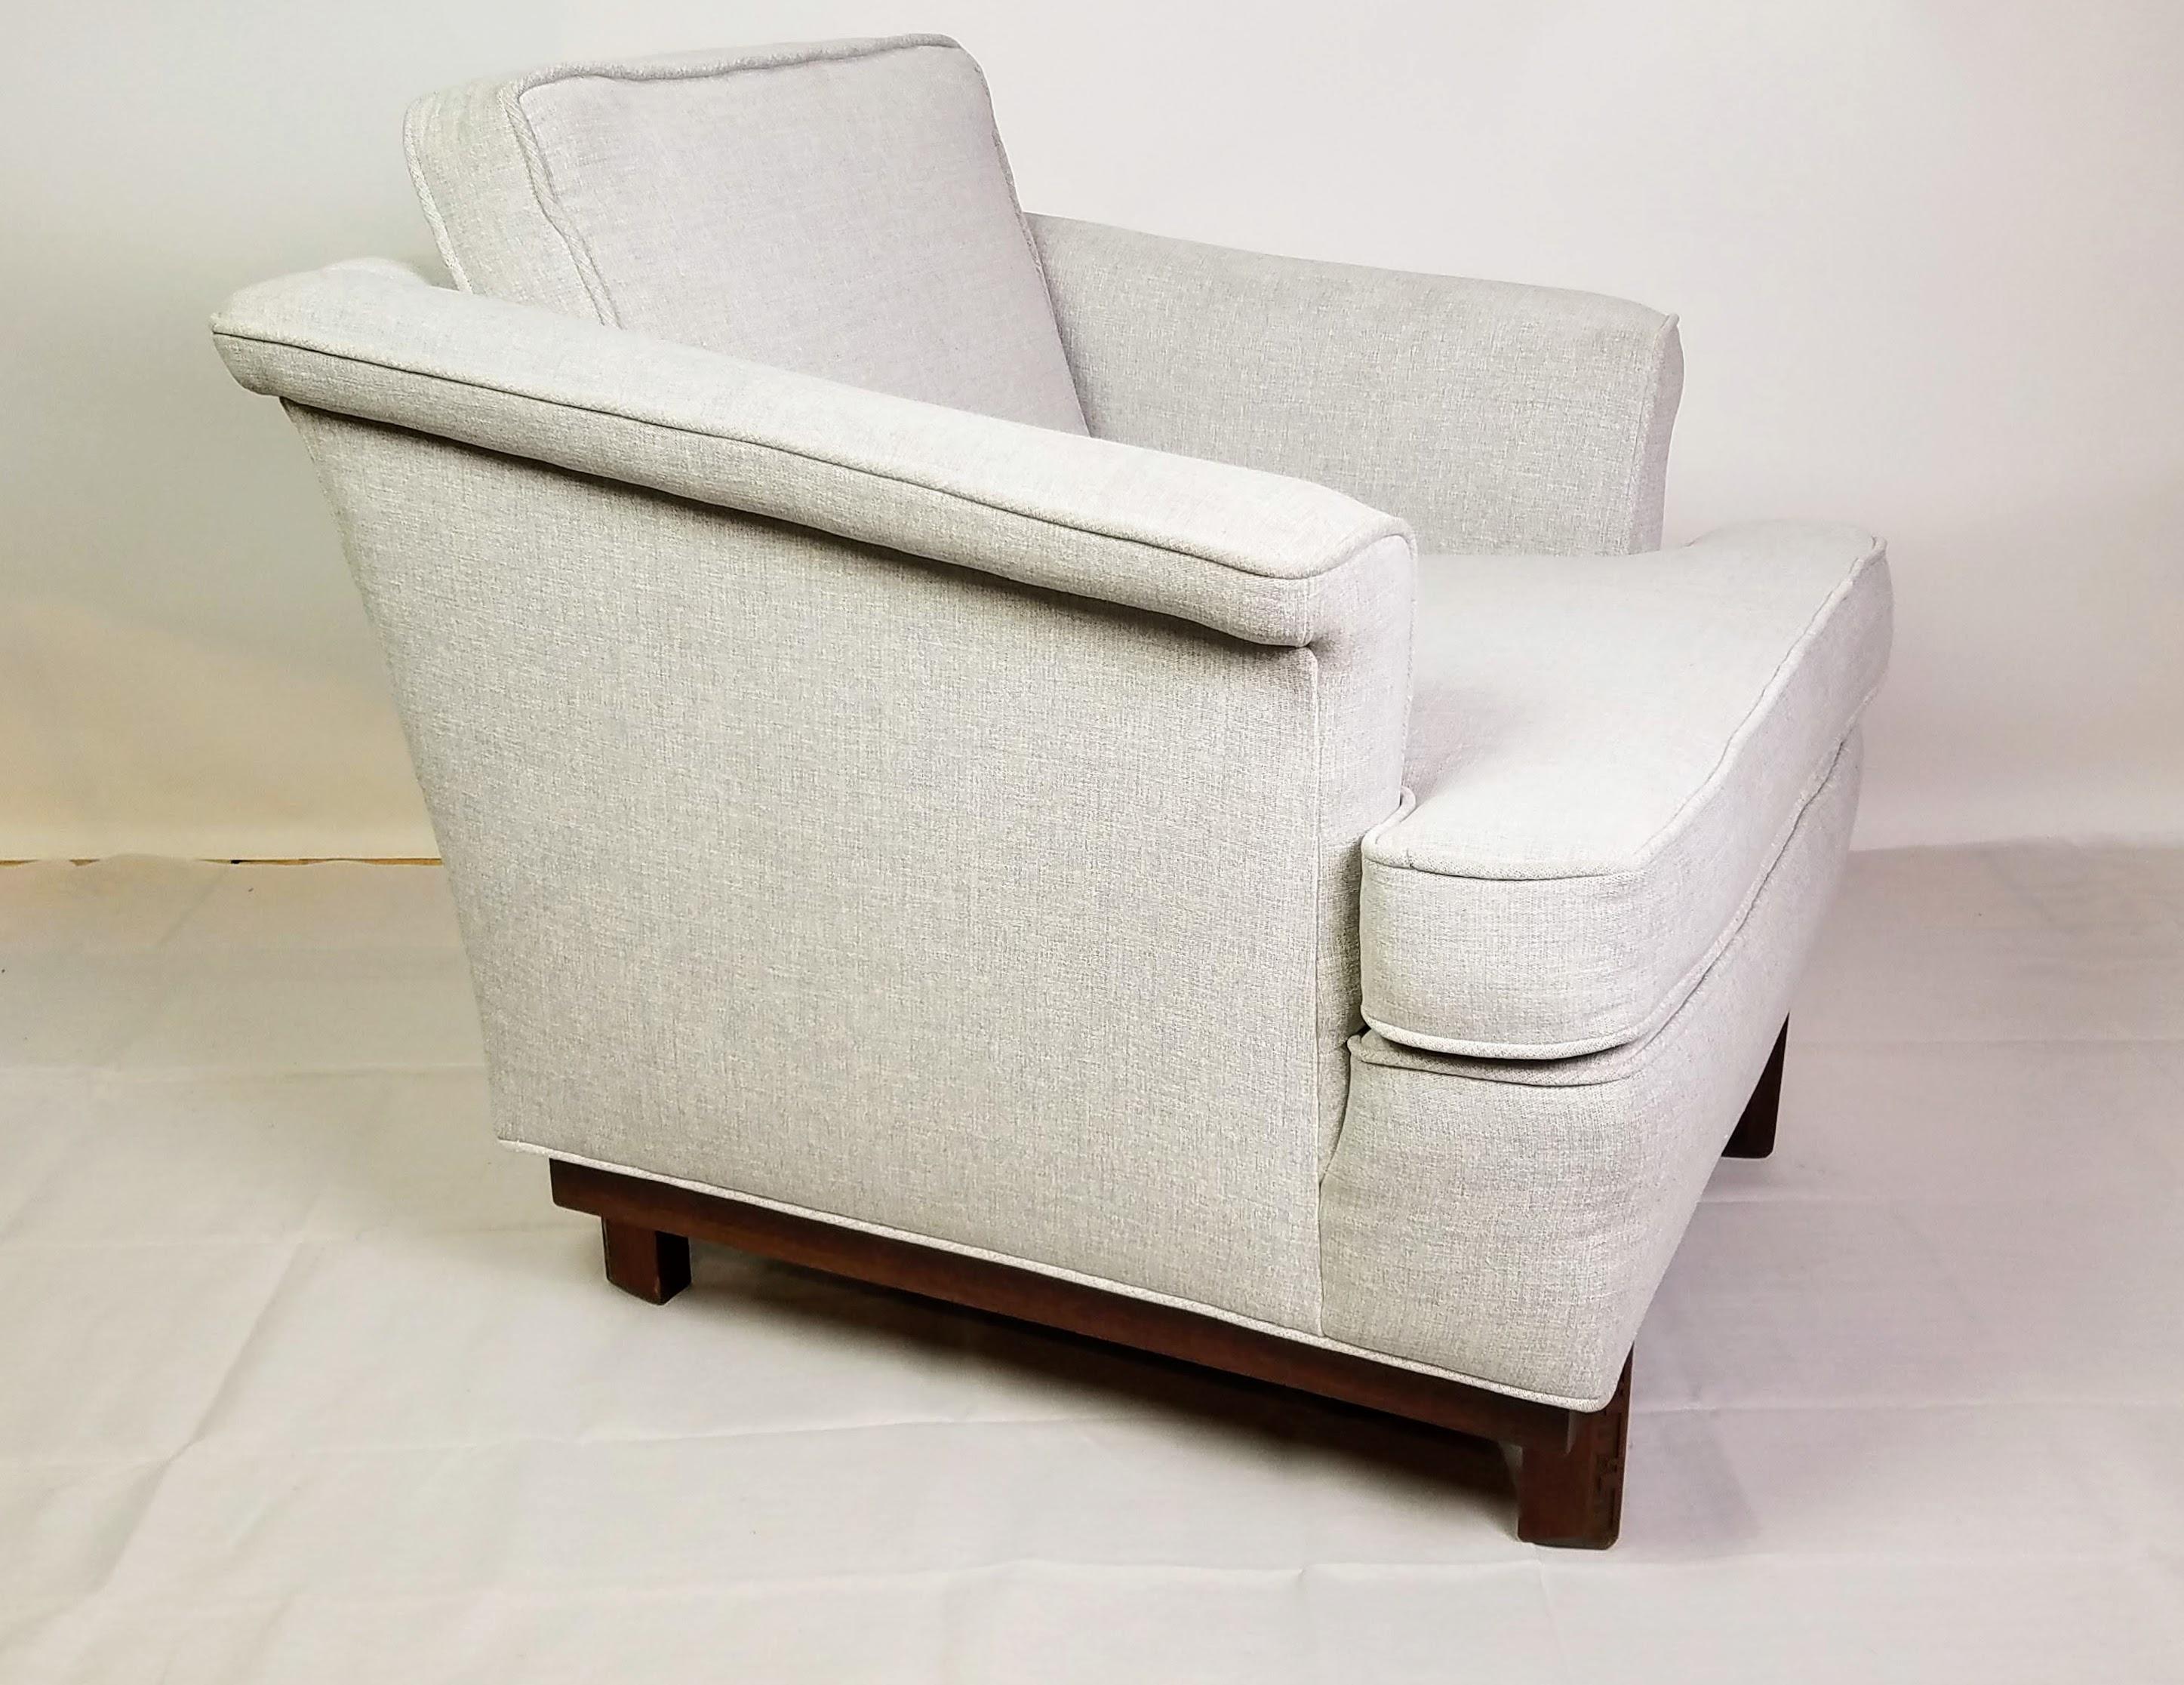 Chamfered Frank Lloyd Wright Mahogany Lounge Chair Heritage Henredon Taliesin Line 1955/56 For Sale